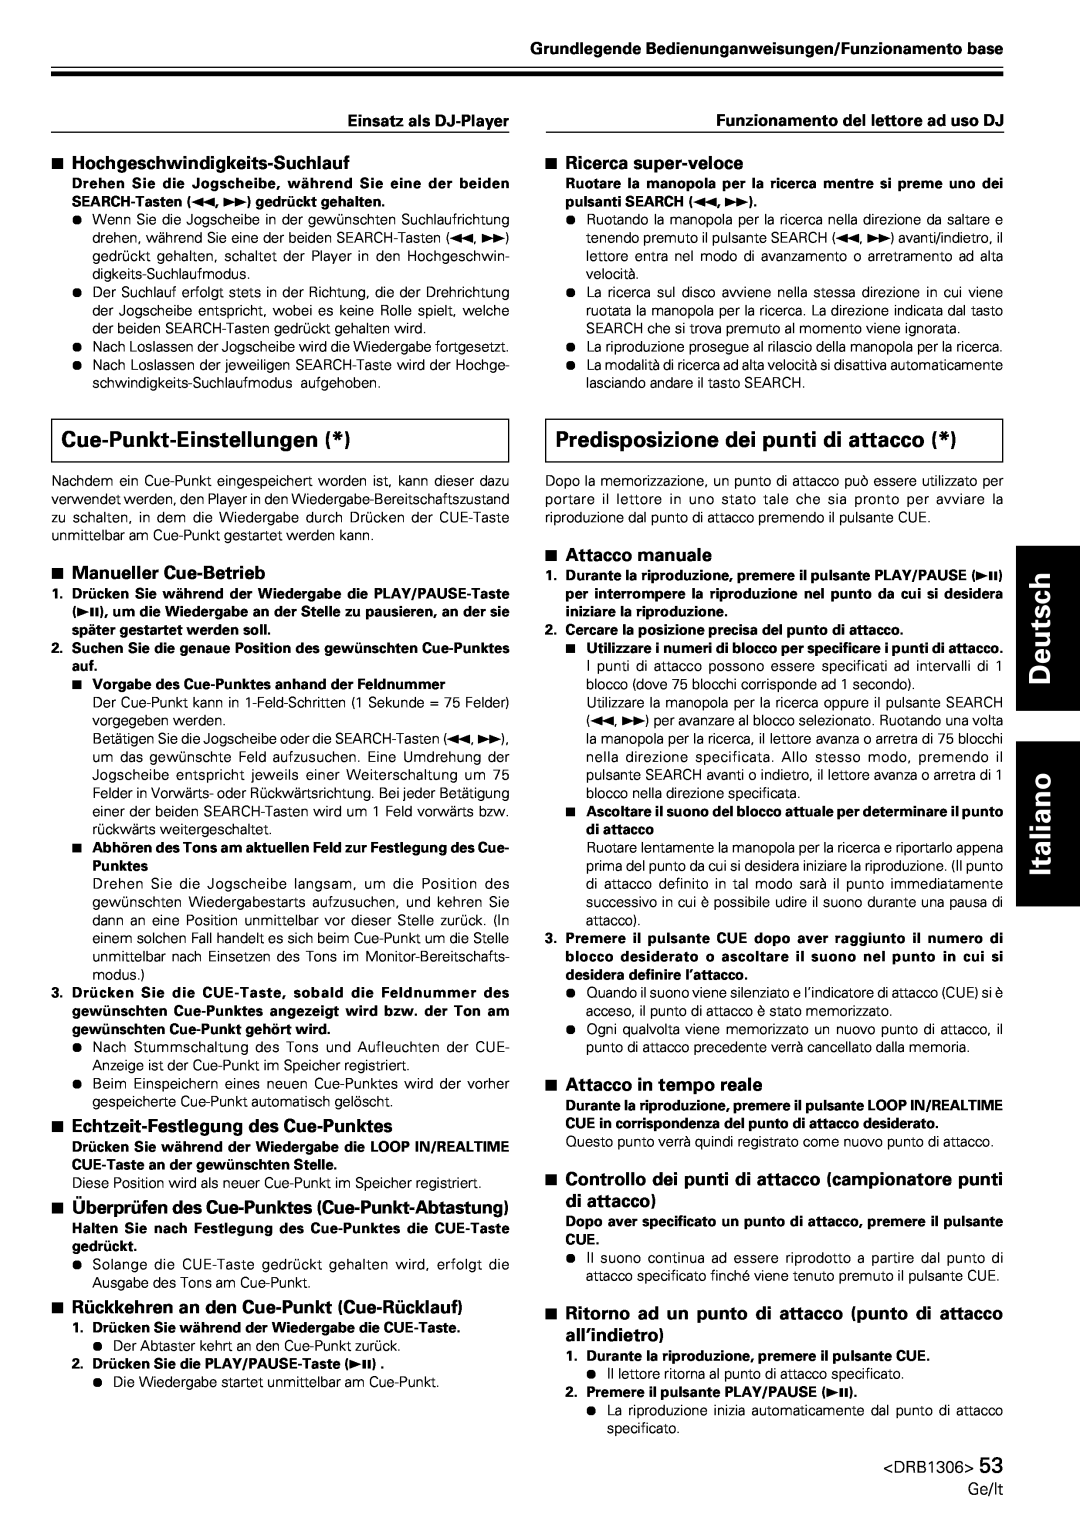 Pioneer CMX-3000 operating instructions Cue-Punkt-Einstellungen, Predisposizione dei punti di attacco, Deutsch Italiano 